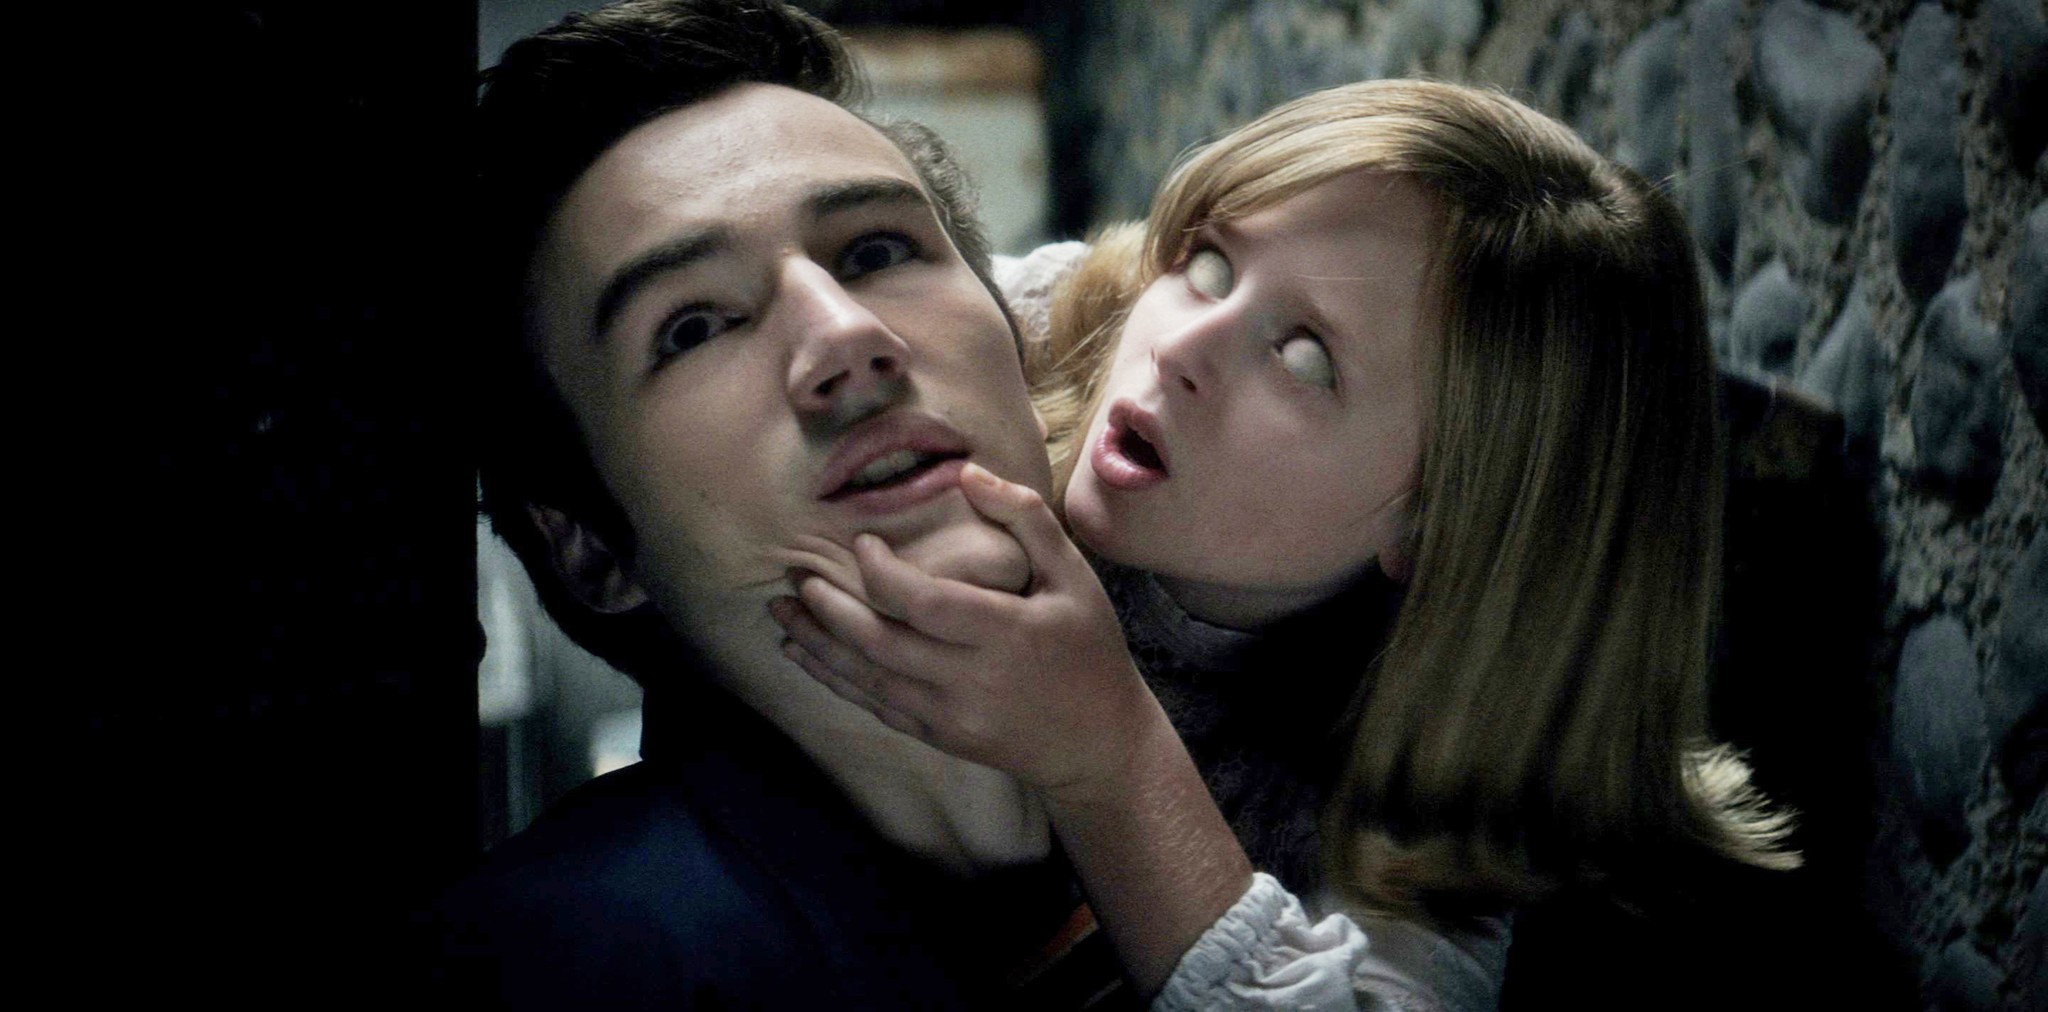 A possessed girl grabs a man in Ouija: Origin of Evil.